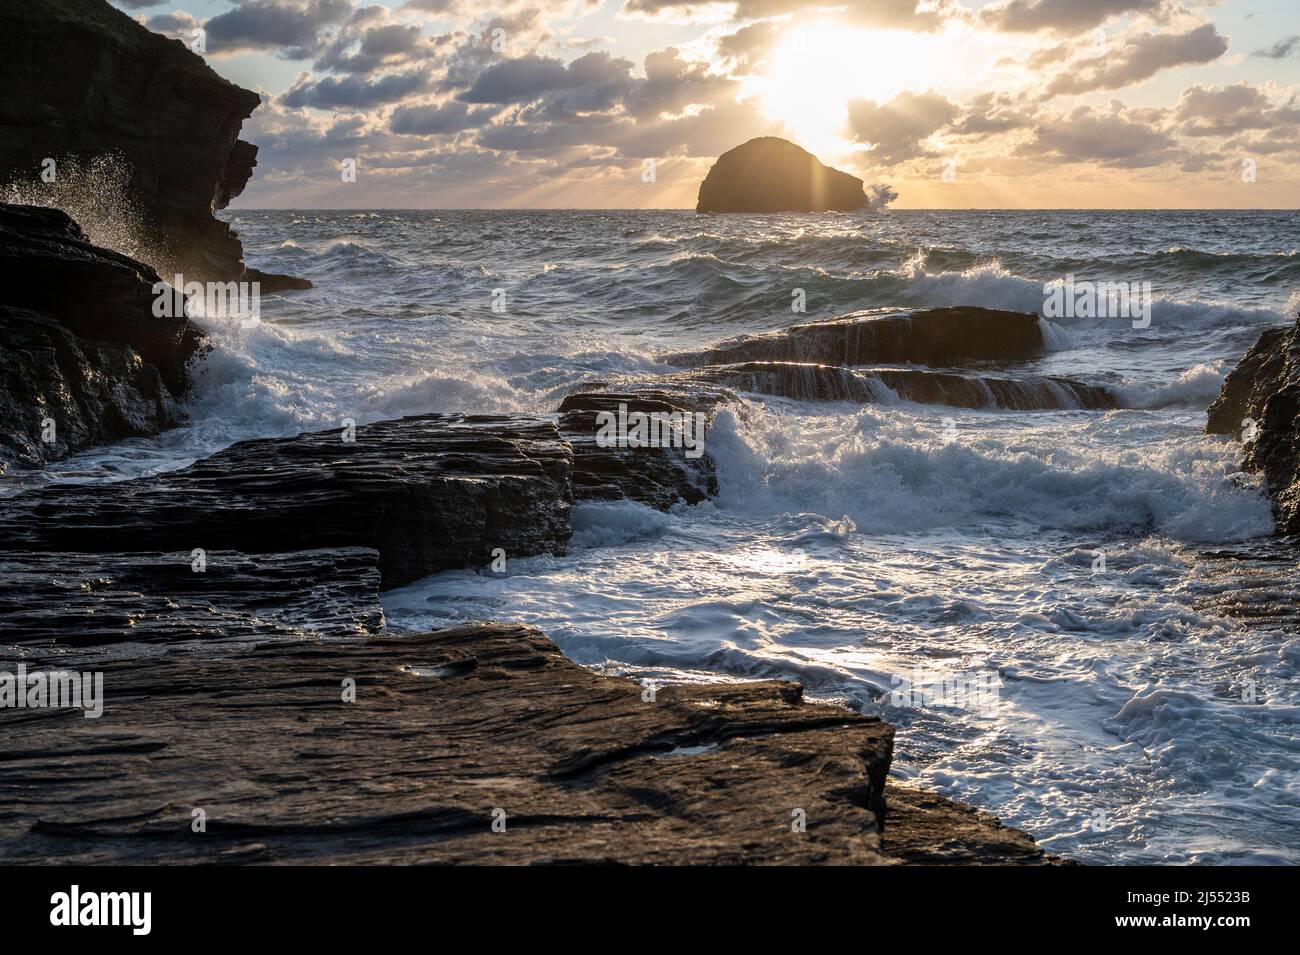 Stormy seas at sunset at Trebarwith Strand, North Cornwall UK, with Gull Rock Island, cliffs and sea spray. Stock Photo